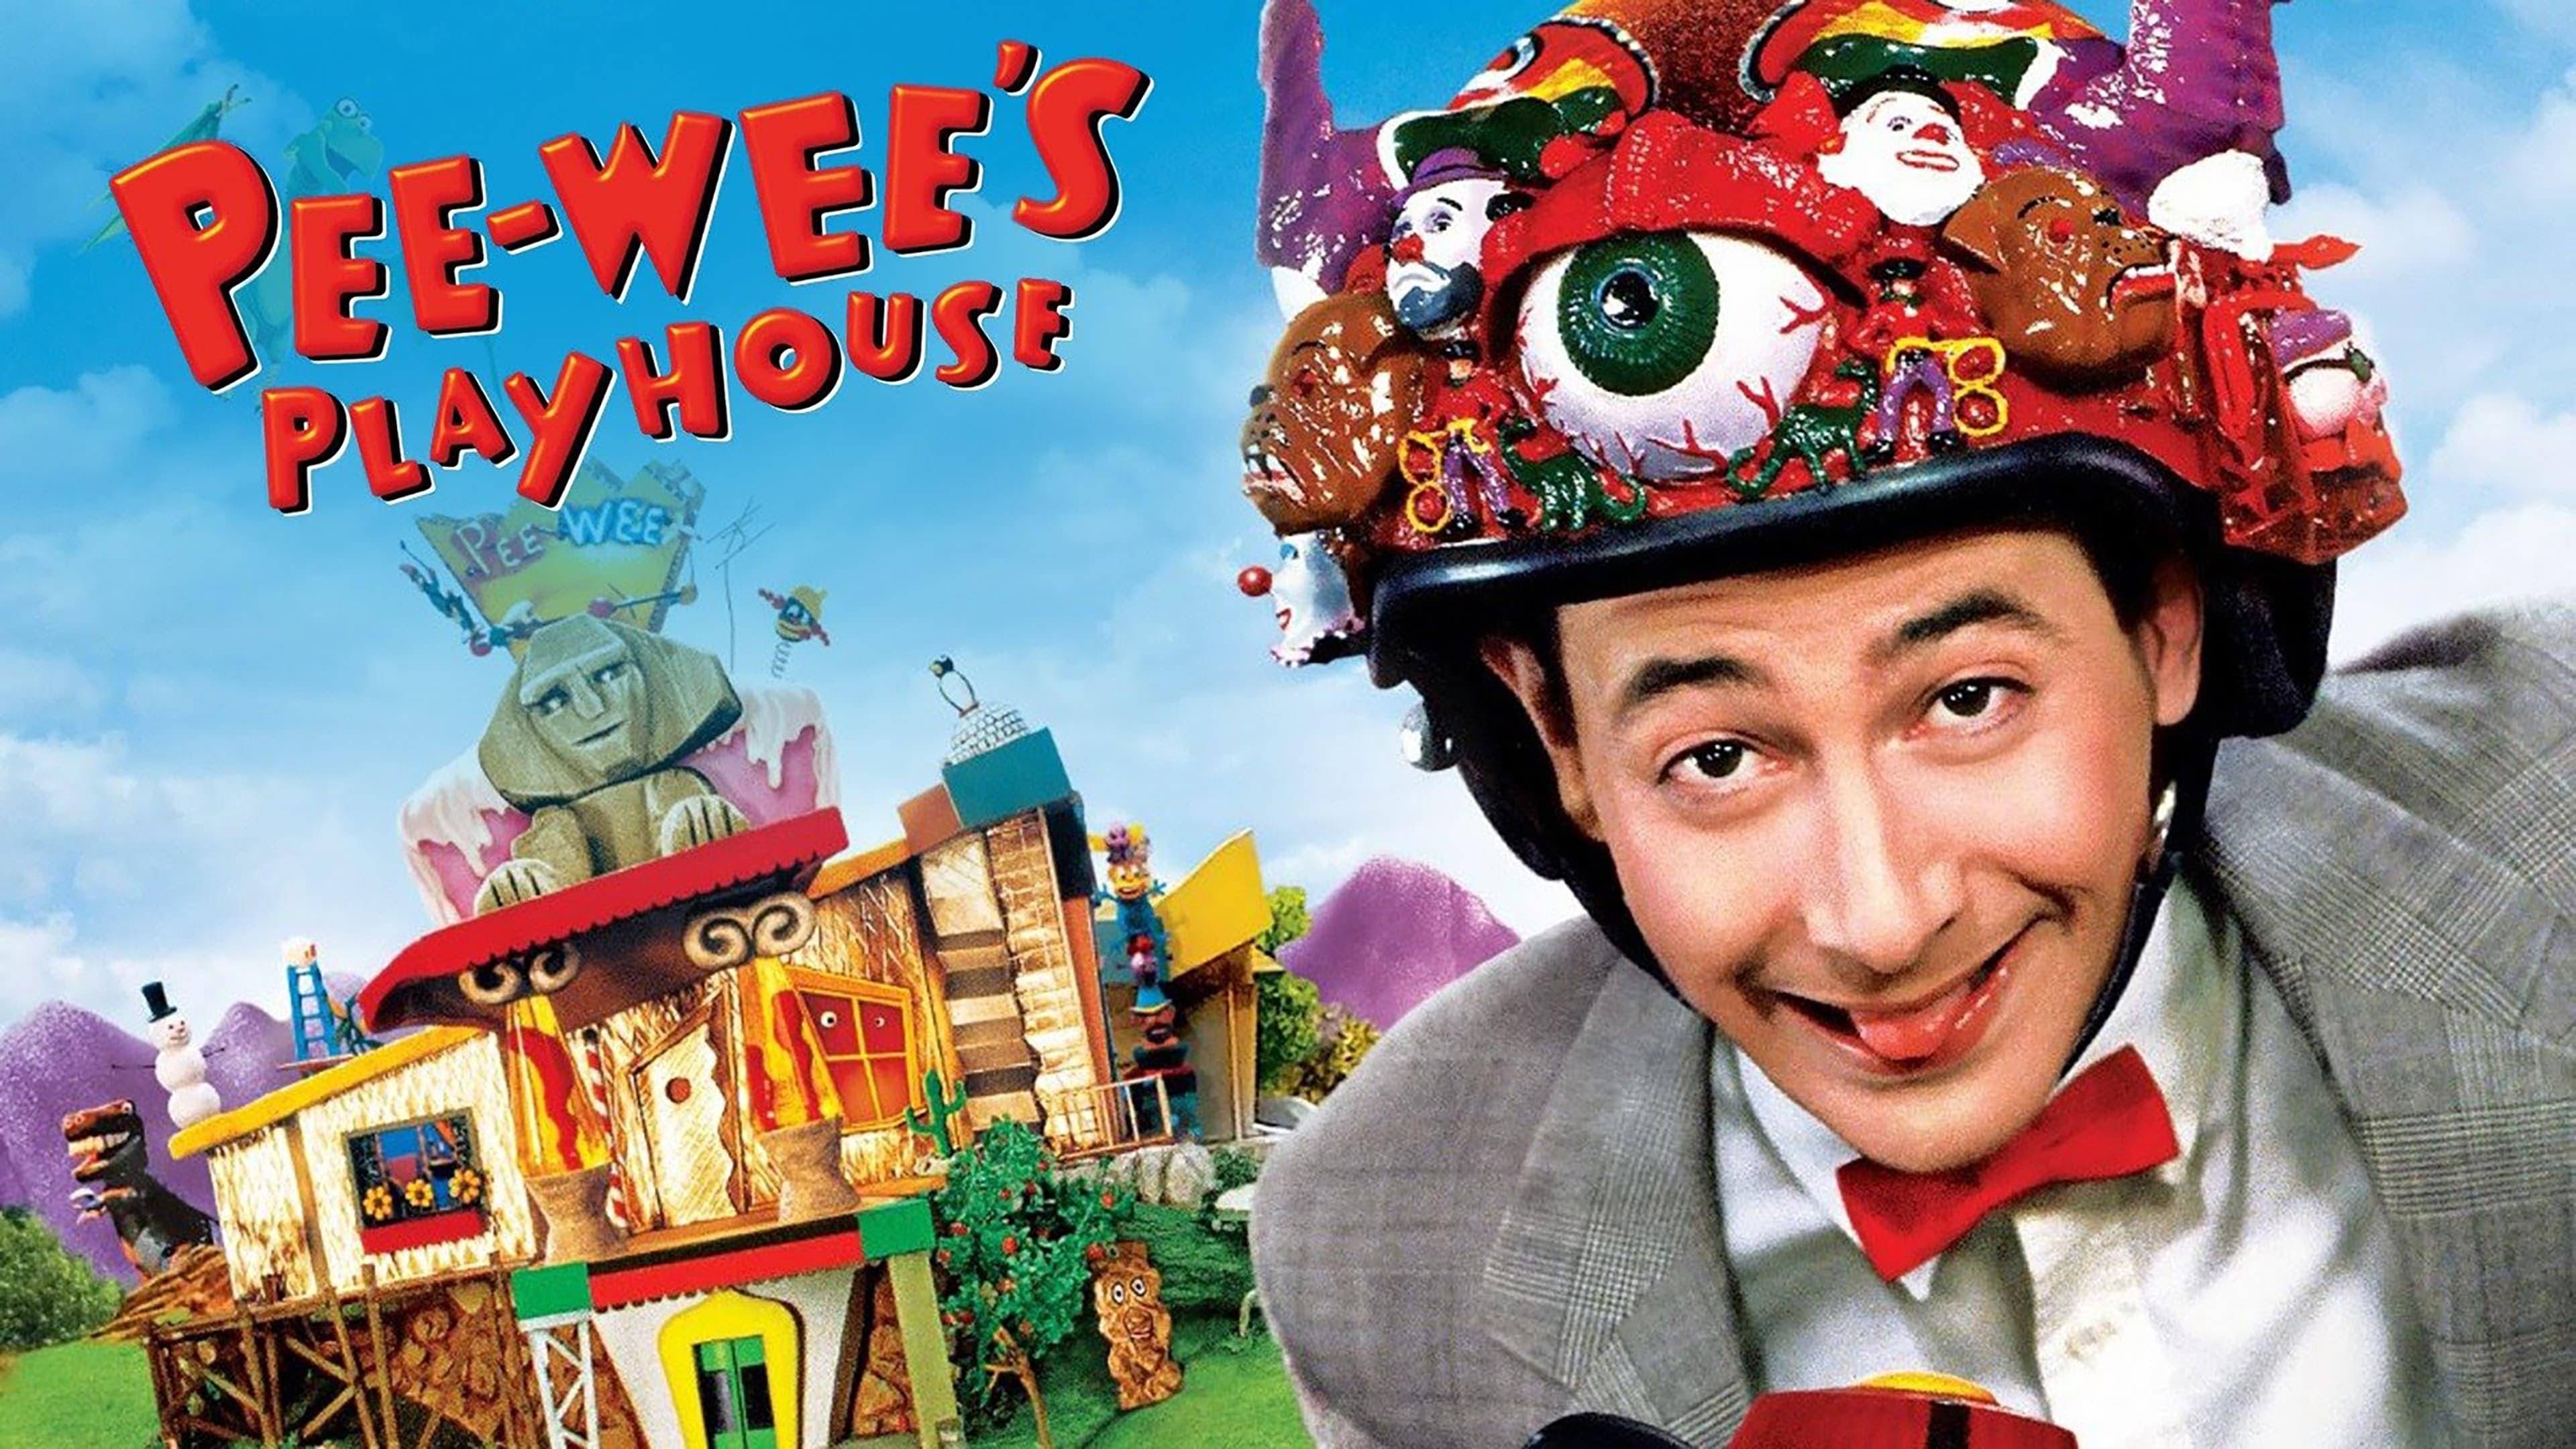 Pee-wee's Playhouse backdrop